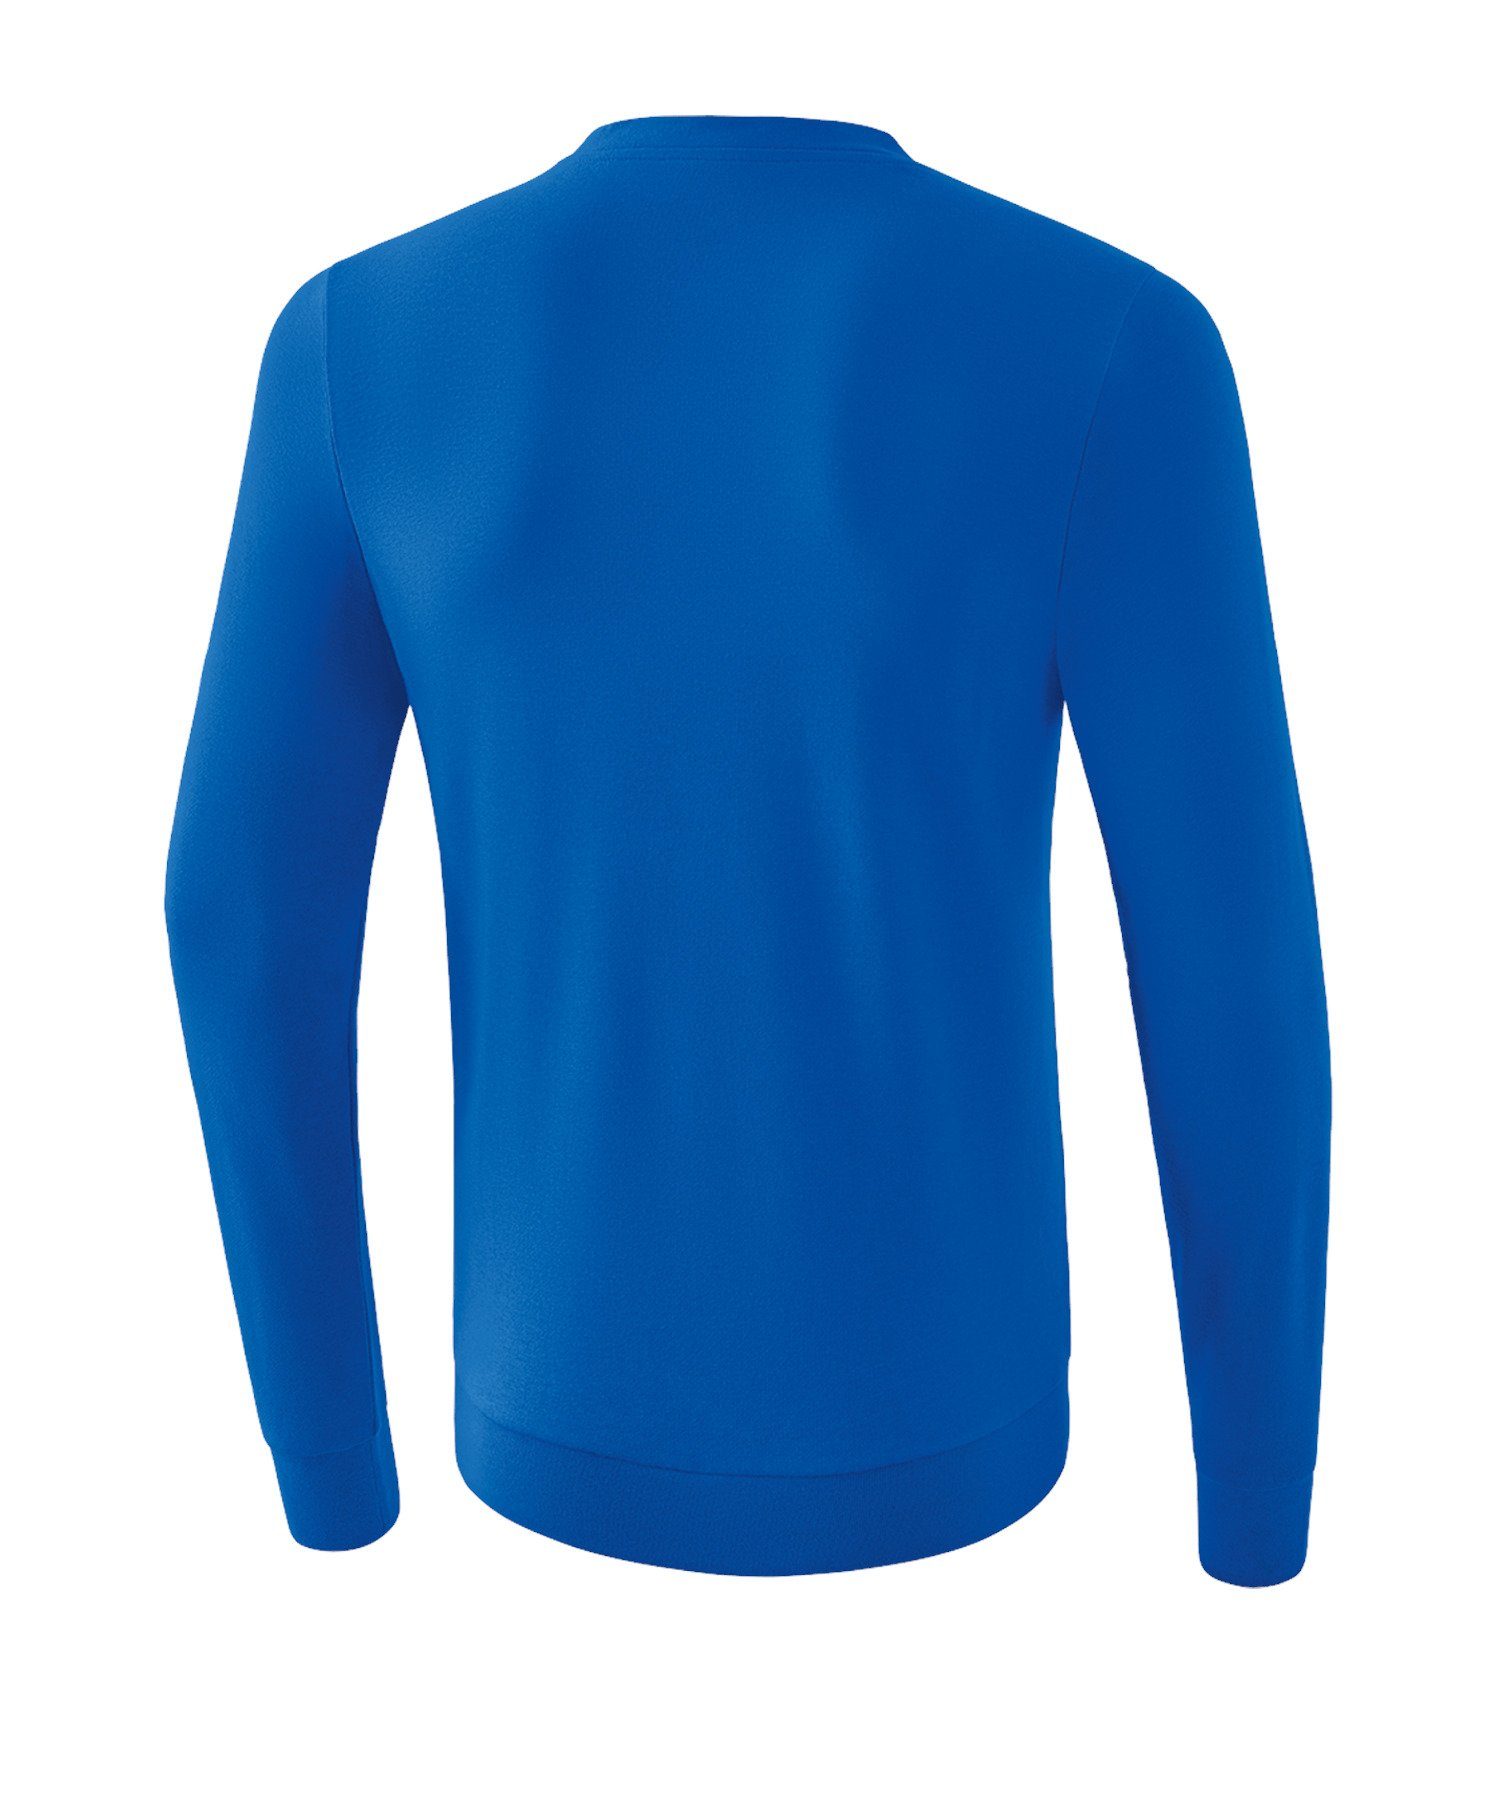 Sweatshirt Basic Erima Sweatshirt blaublau